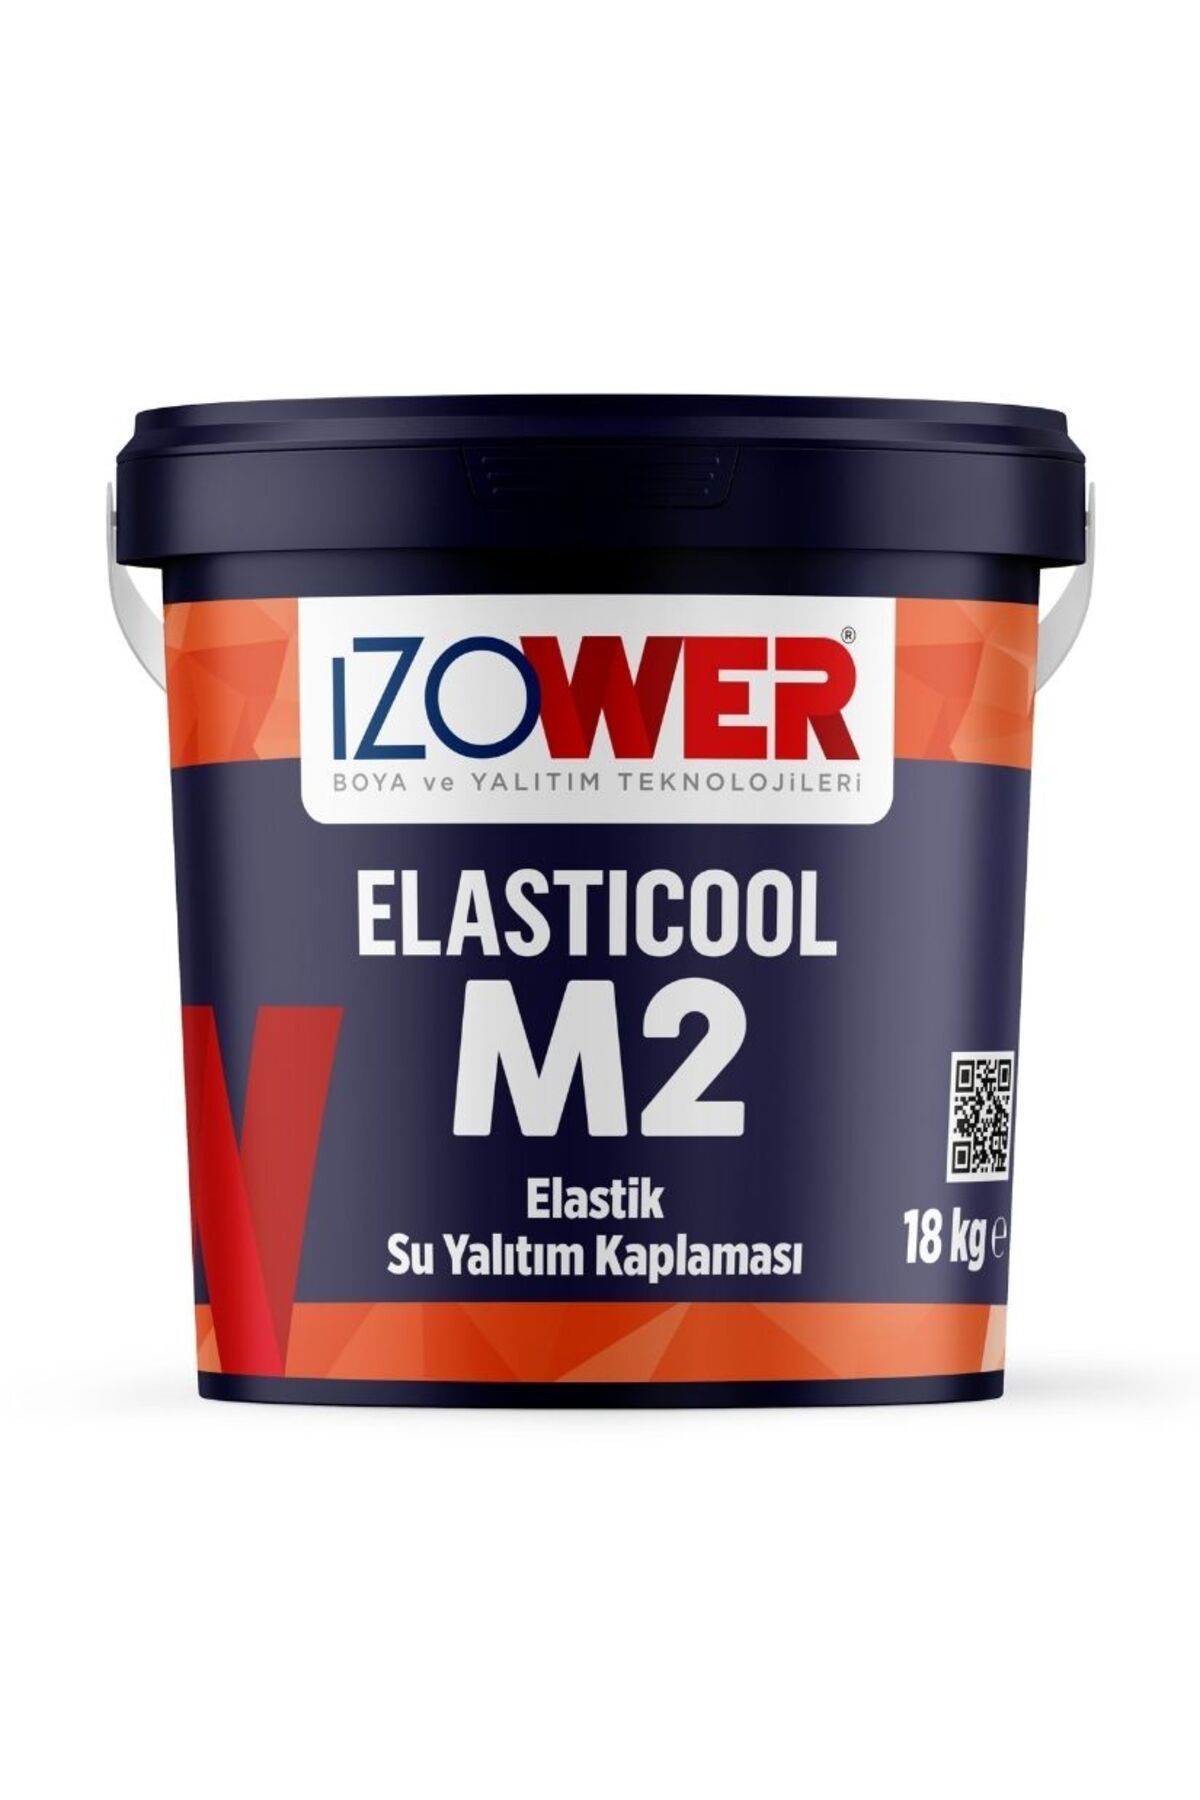 izower M2 Elastik Su Yalıtım Kaplaması- Kiremit Rengi- 18 Kg